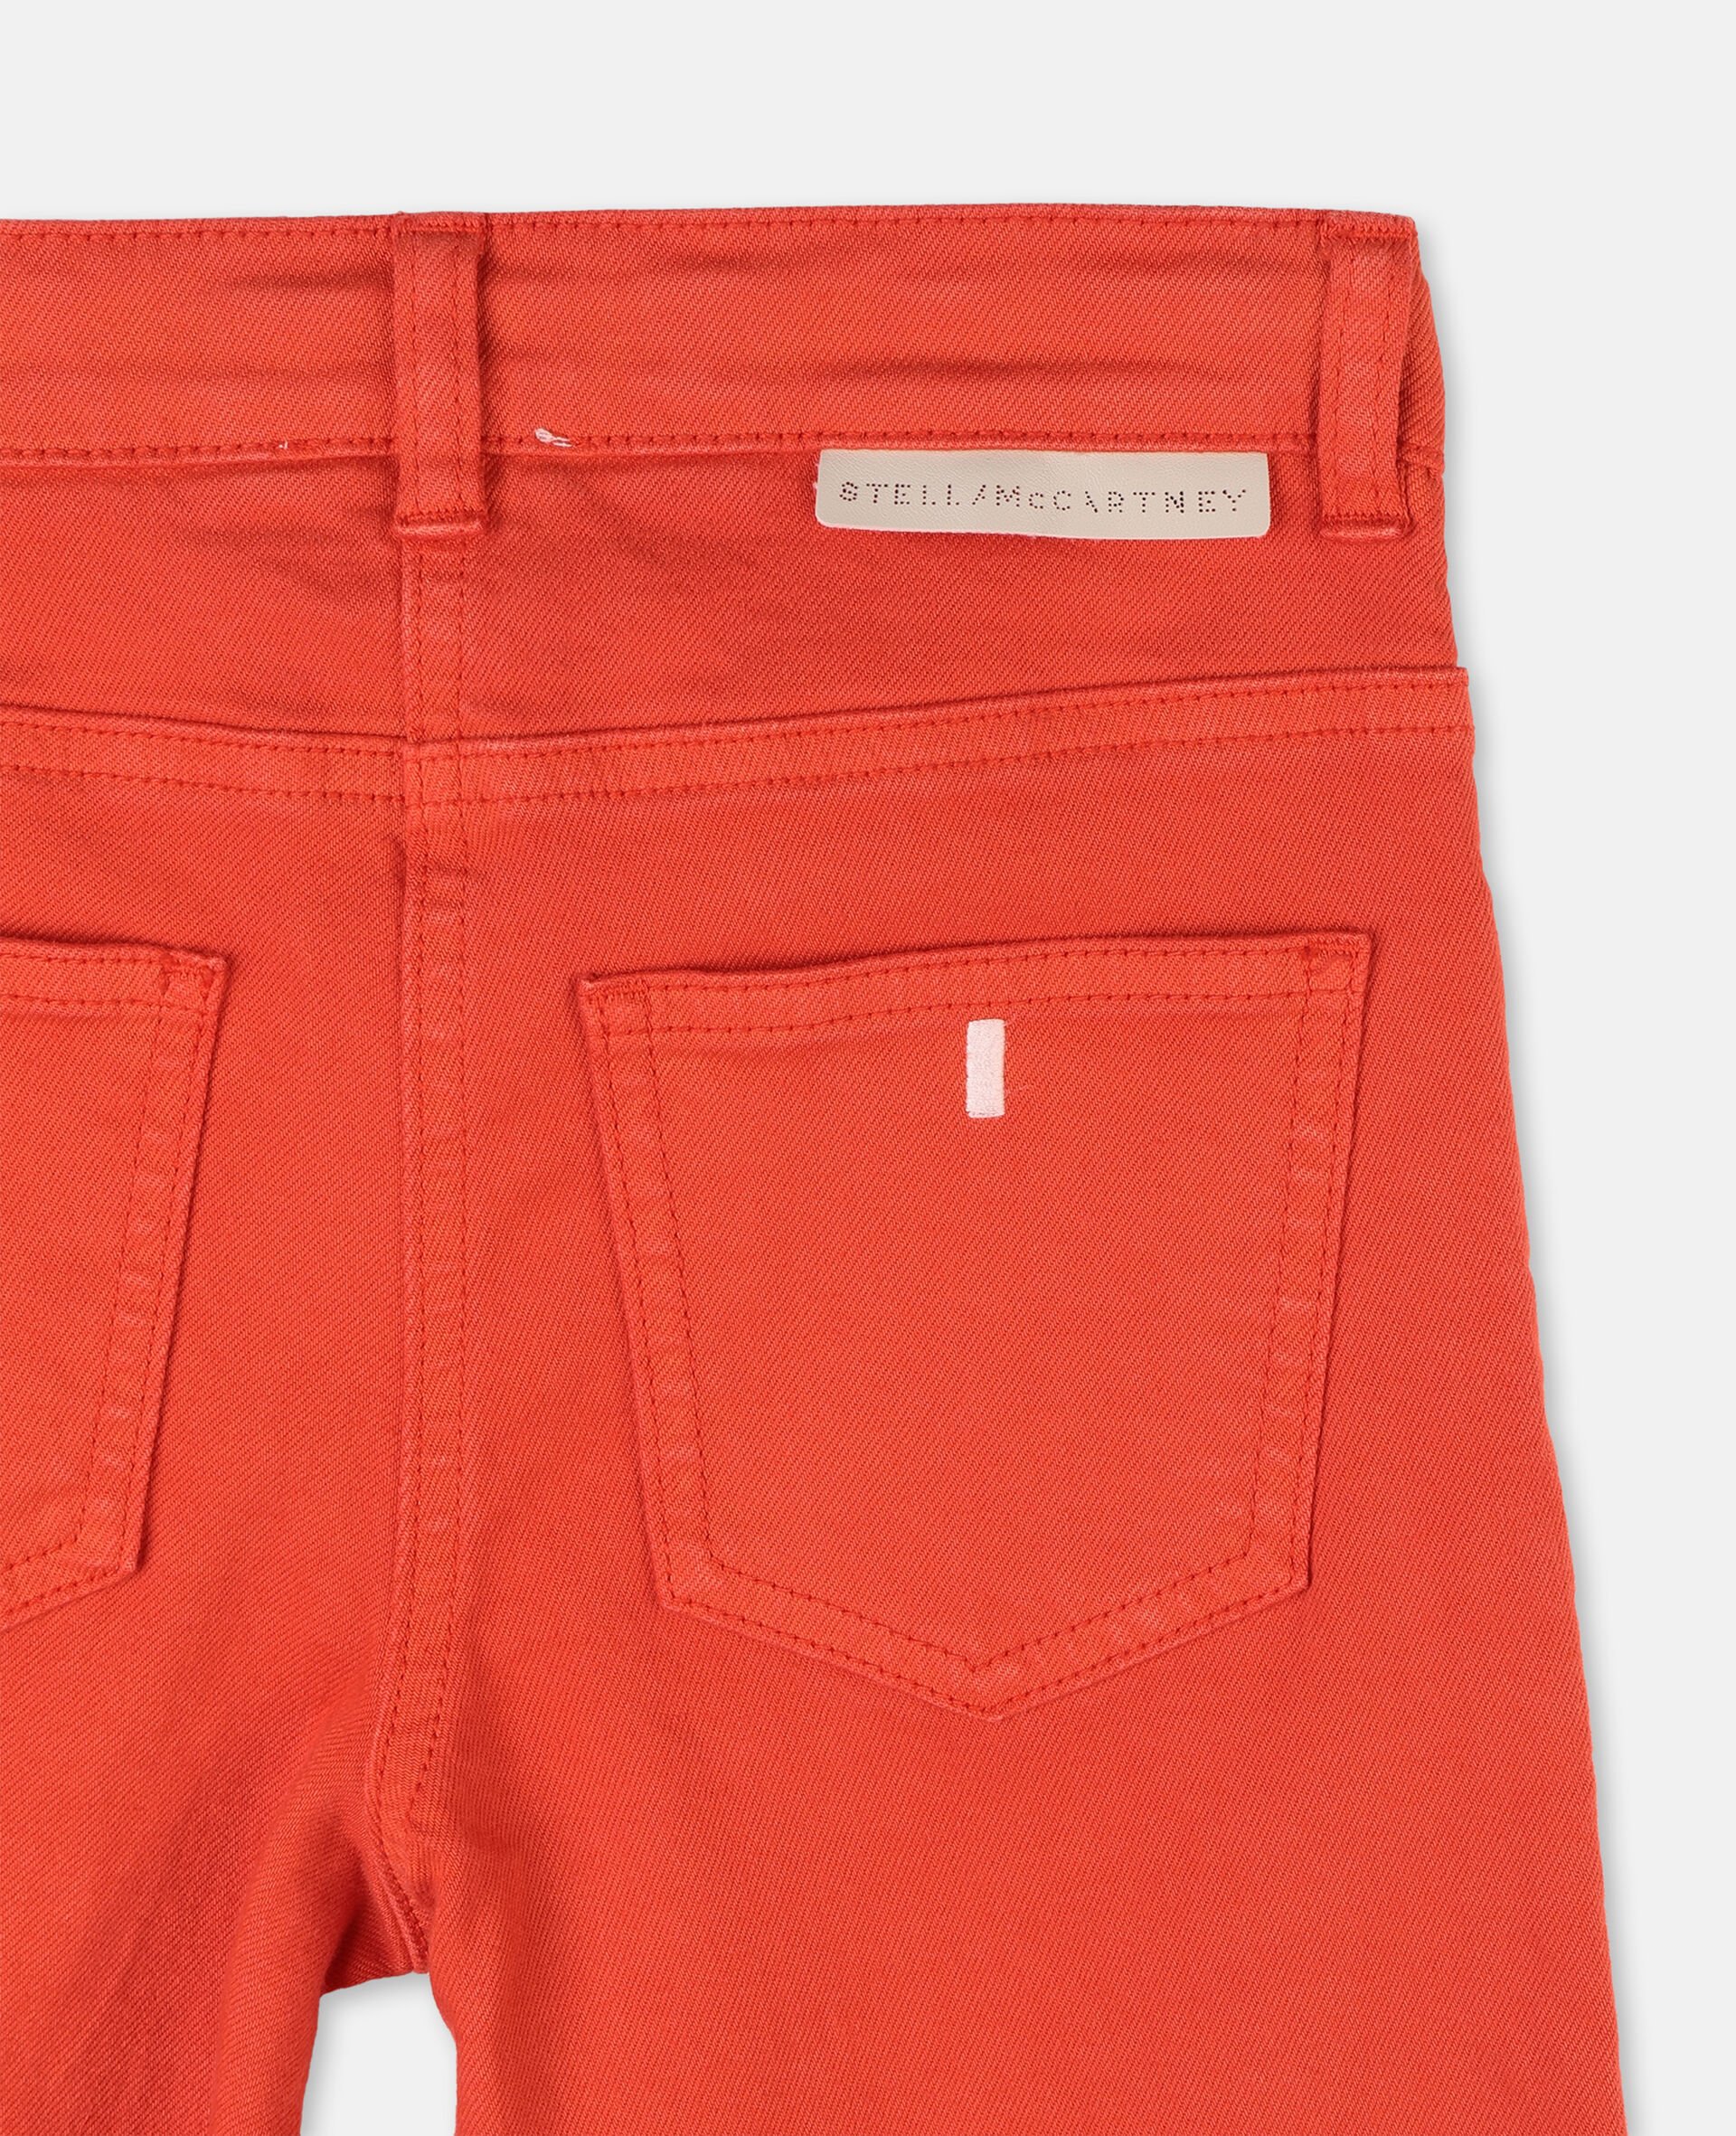 Cotton Denim Pants-Red-large image number 1